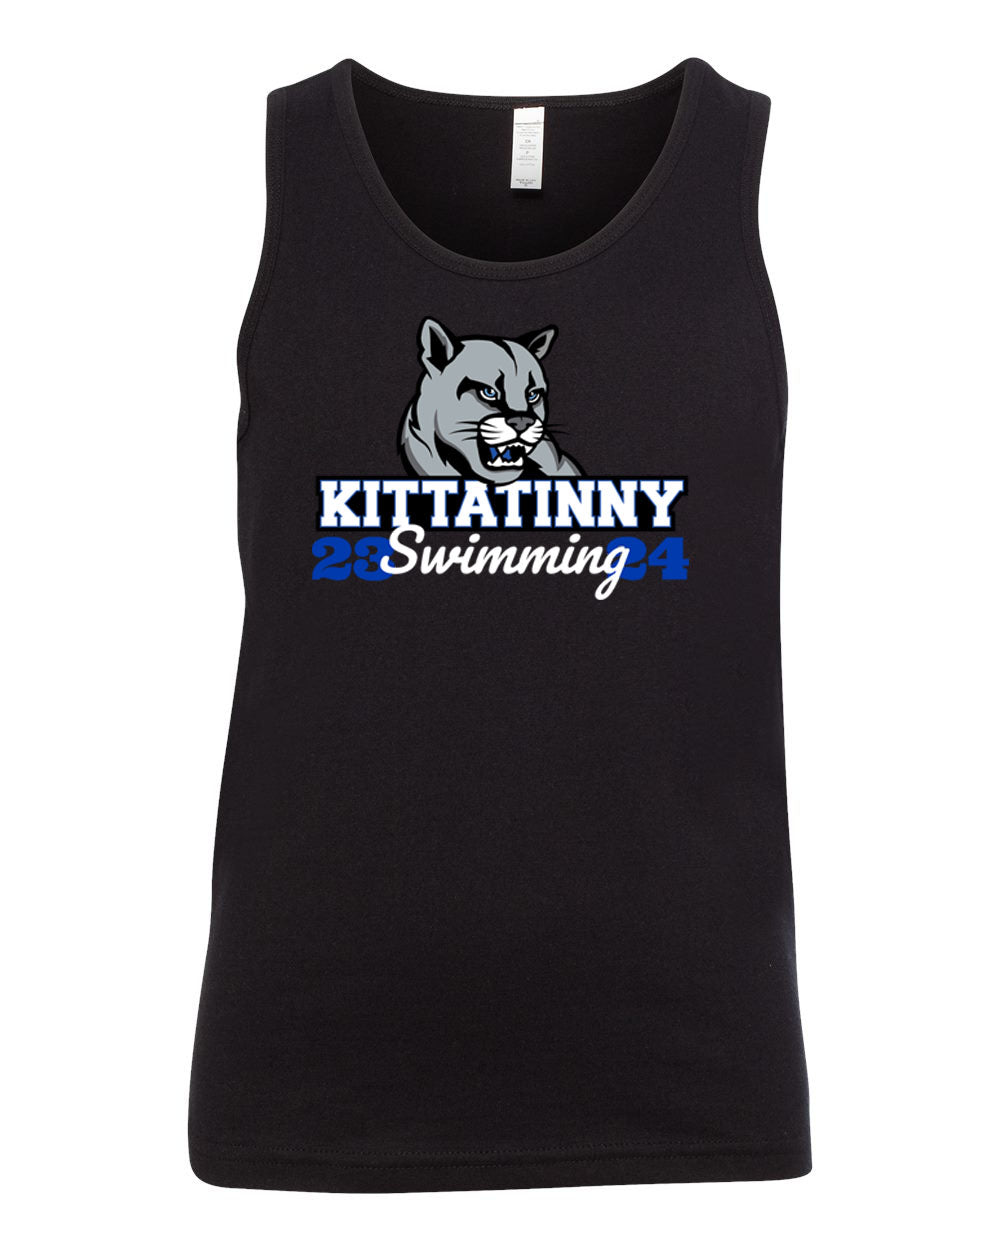 Kittatinny Swimming design 2 Muscle Tank Top